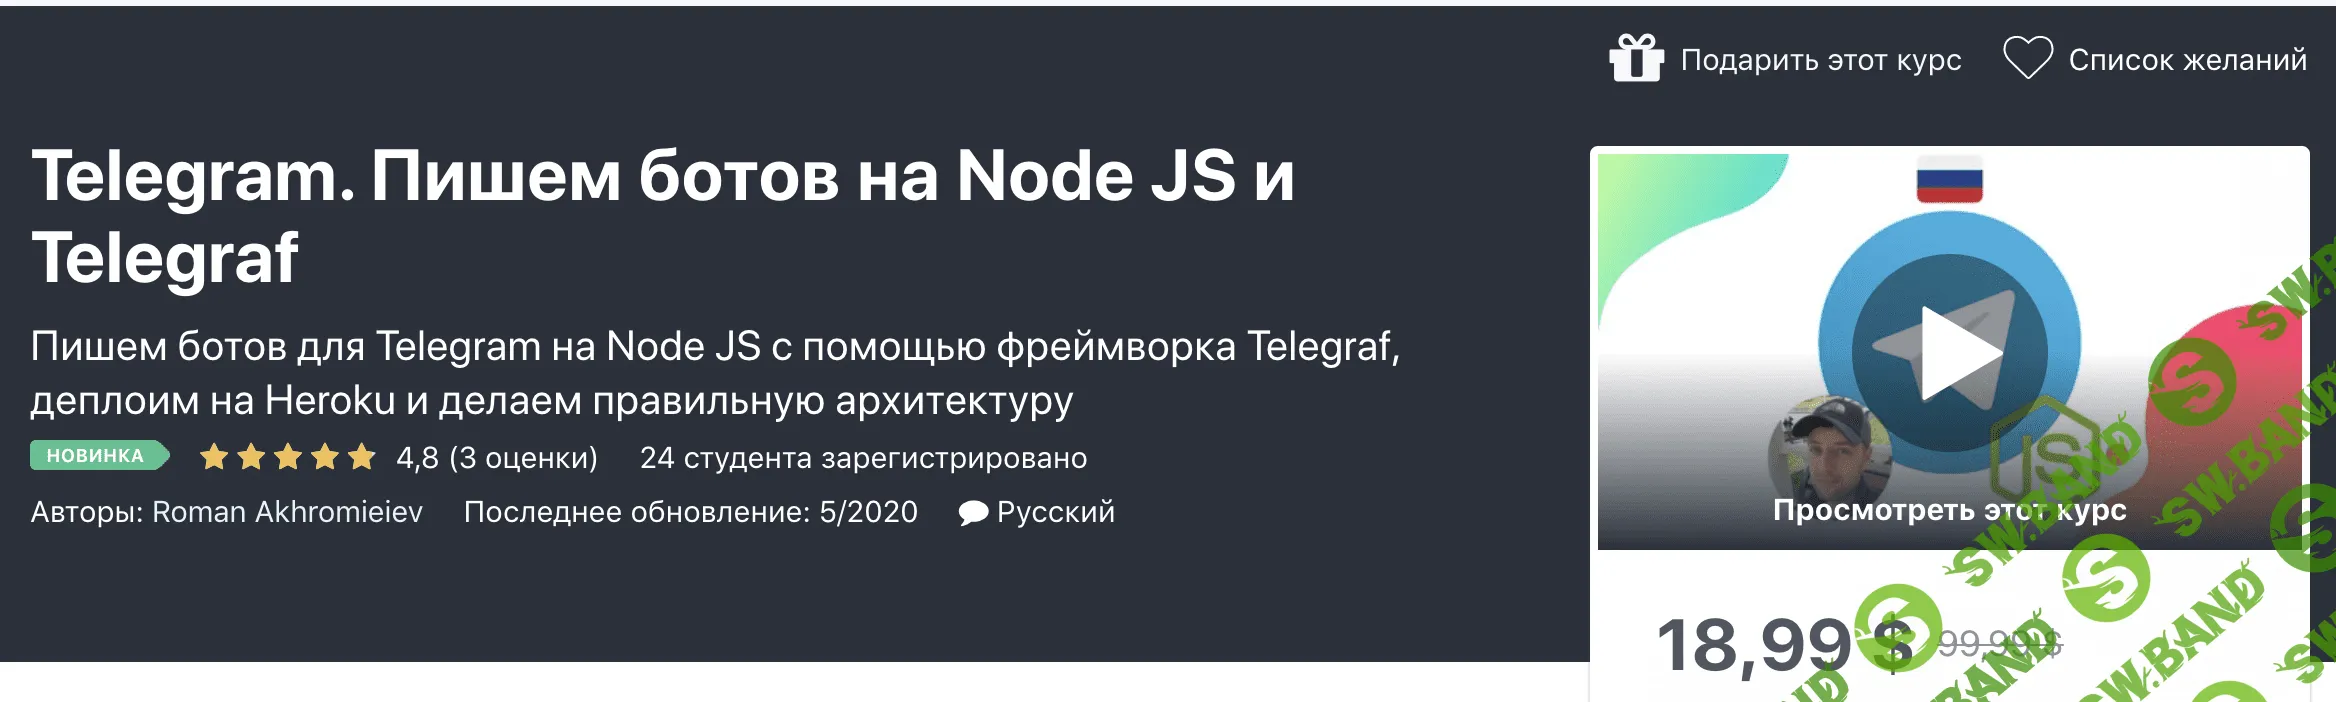 [Udemy] Roman Akhromieiev - Telegram. Пишем ботов на Node JS и Telegraf (2020)